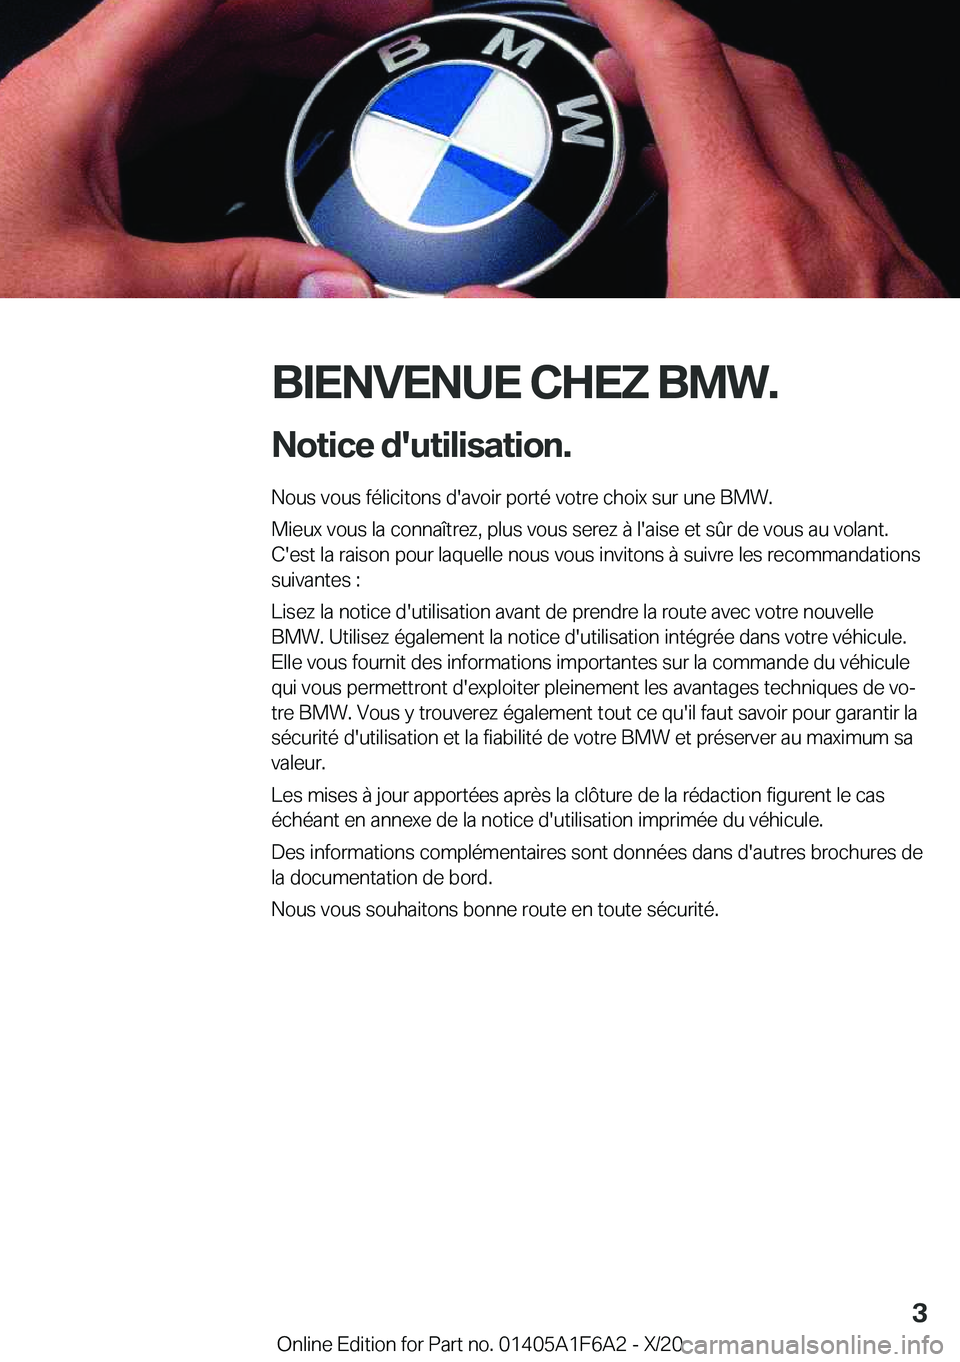 BMW X4 2021  Notices Demploi (in French) �B�I�E�N�V�E�N�U�E��C�H�E�Z��B�M�W�.�N�o�t�i�c�e��d�'�u�t�i�l�i�s�a�t�i�o�n�.
�N�o�u�s��v�o�u�s��f�é�l�i�c�i�t�o�n�s��d�'�a�v�o�i�r��p�o�r�t�é��v�o�t�r�e��c�h�o�i�x��s�u�r��u�n�e�